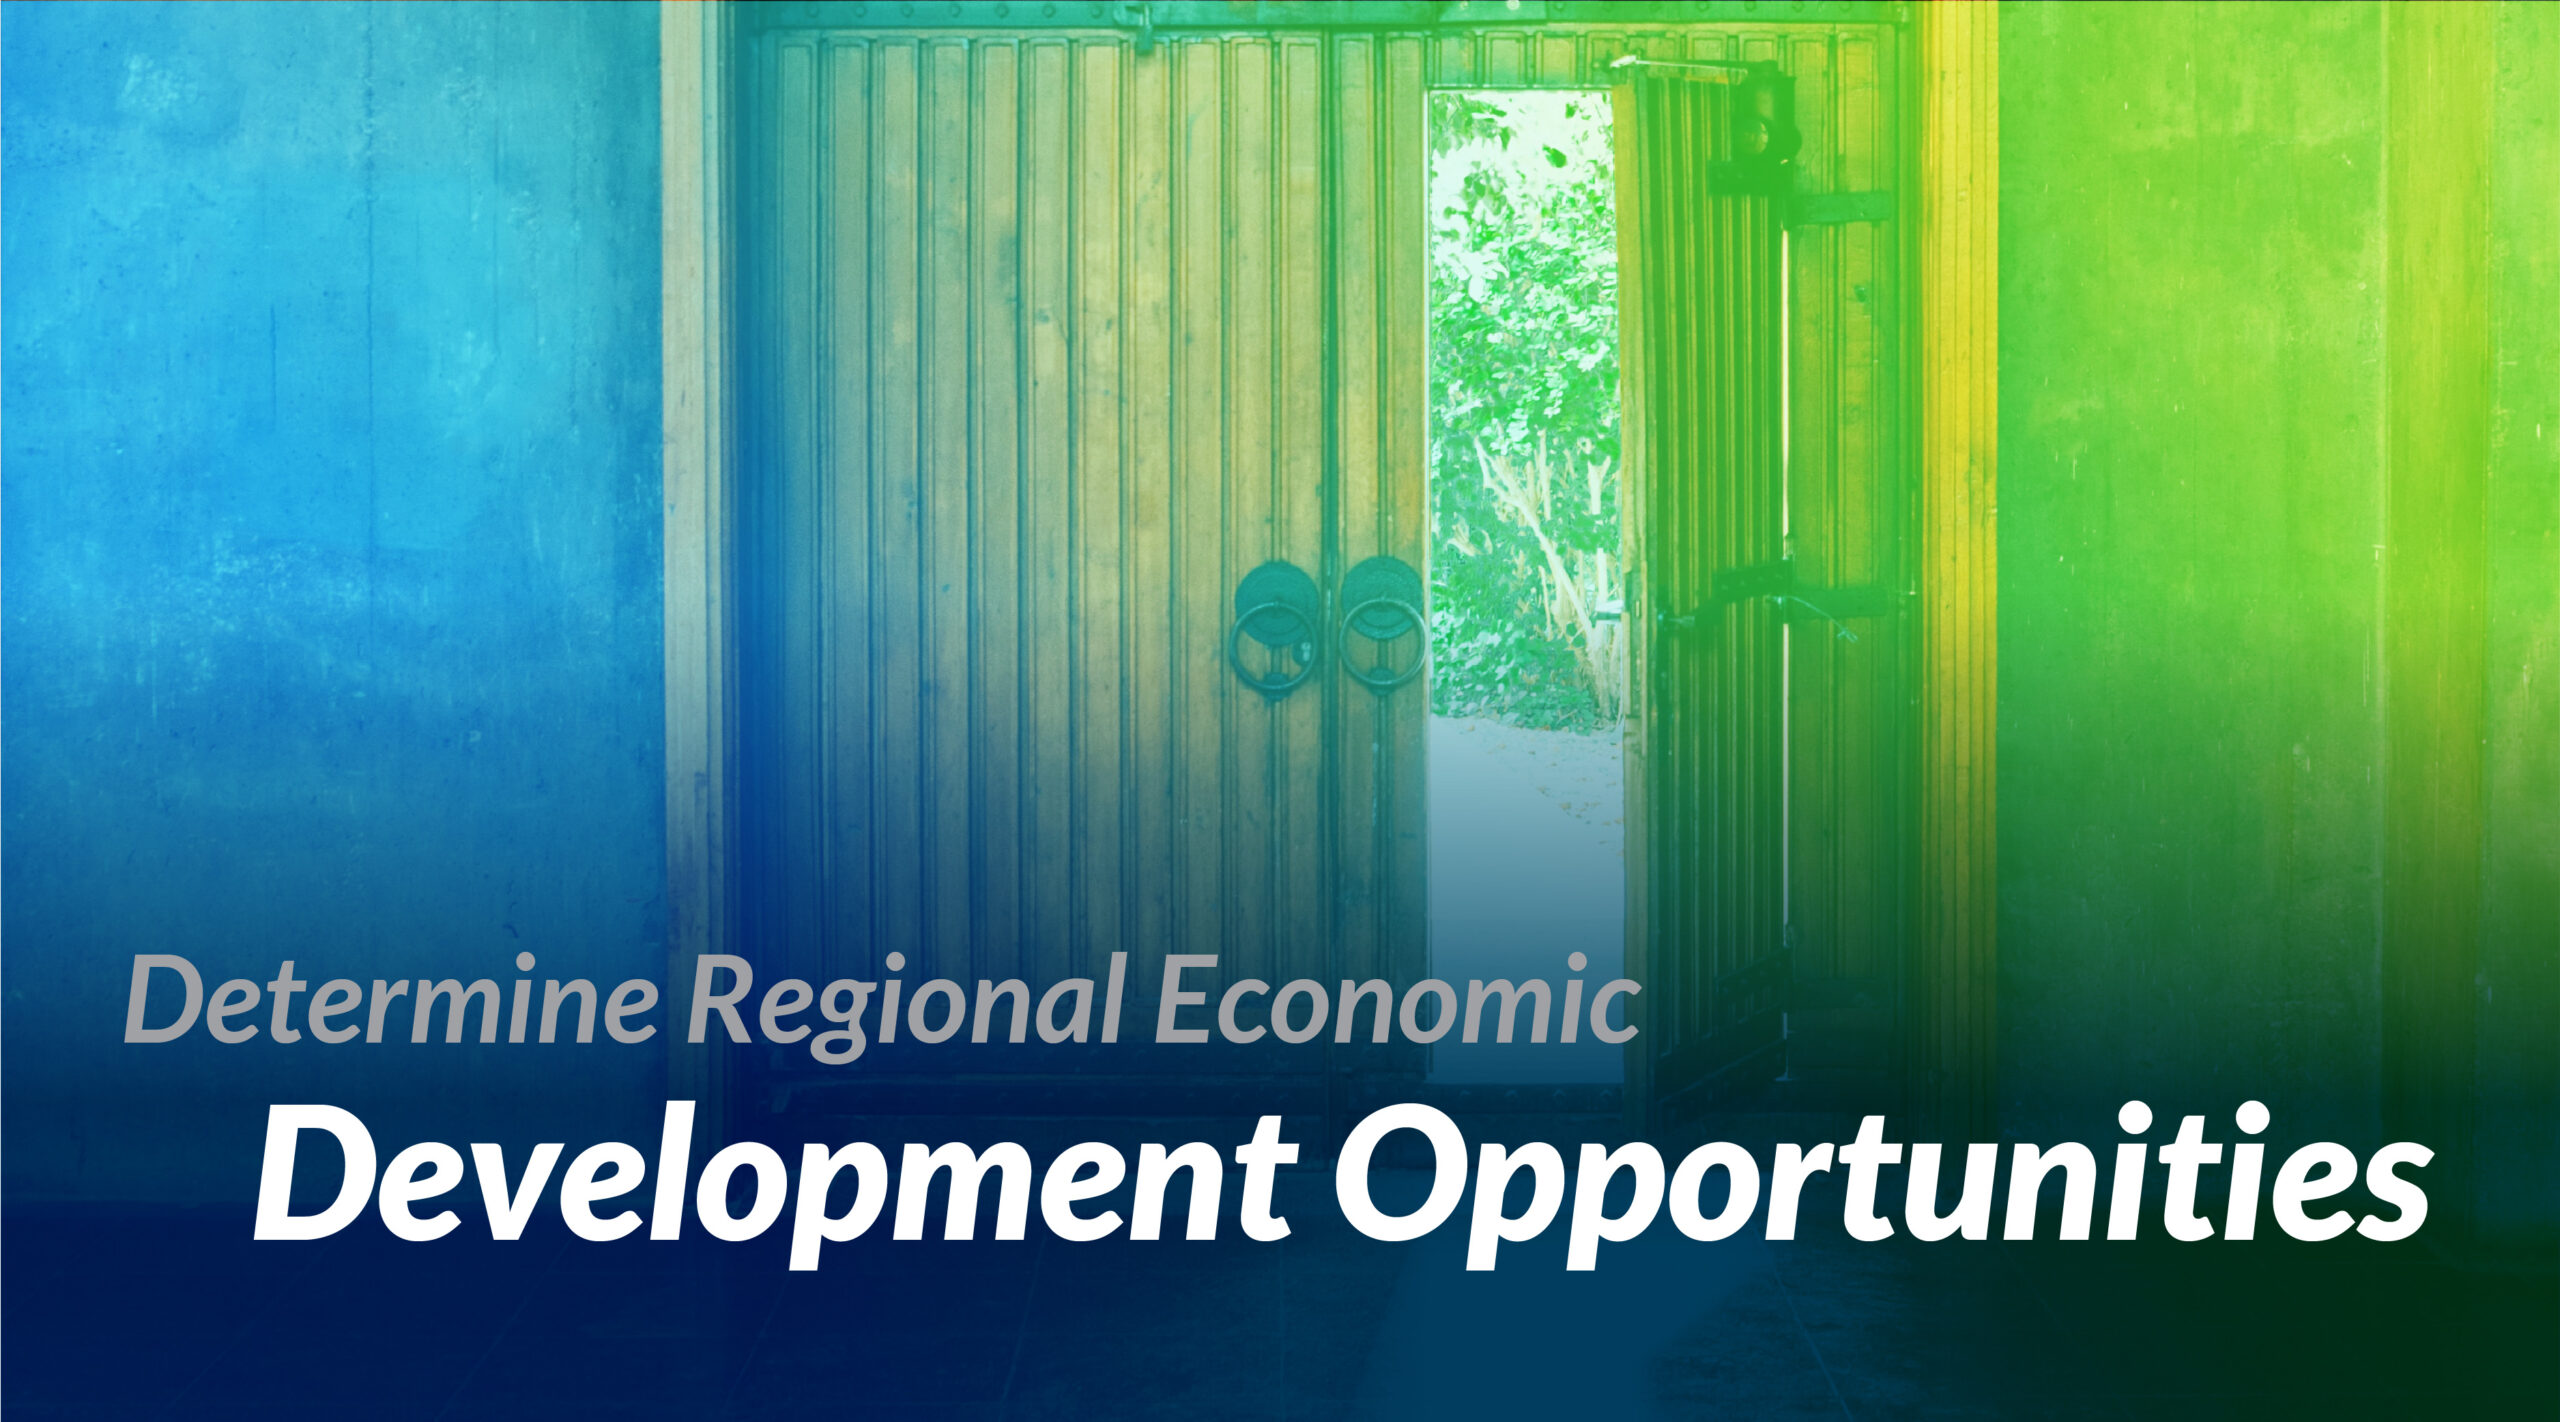 Determining regional economic development opportunities